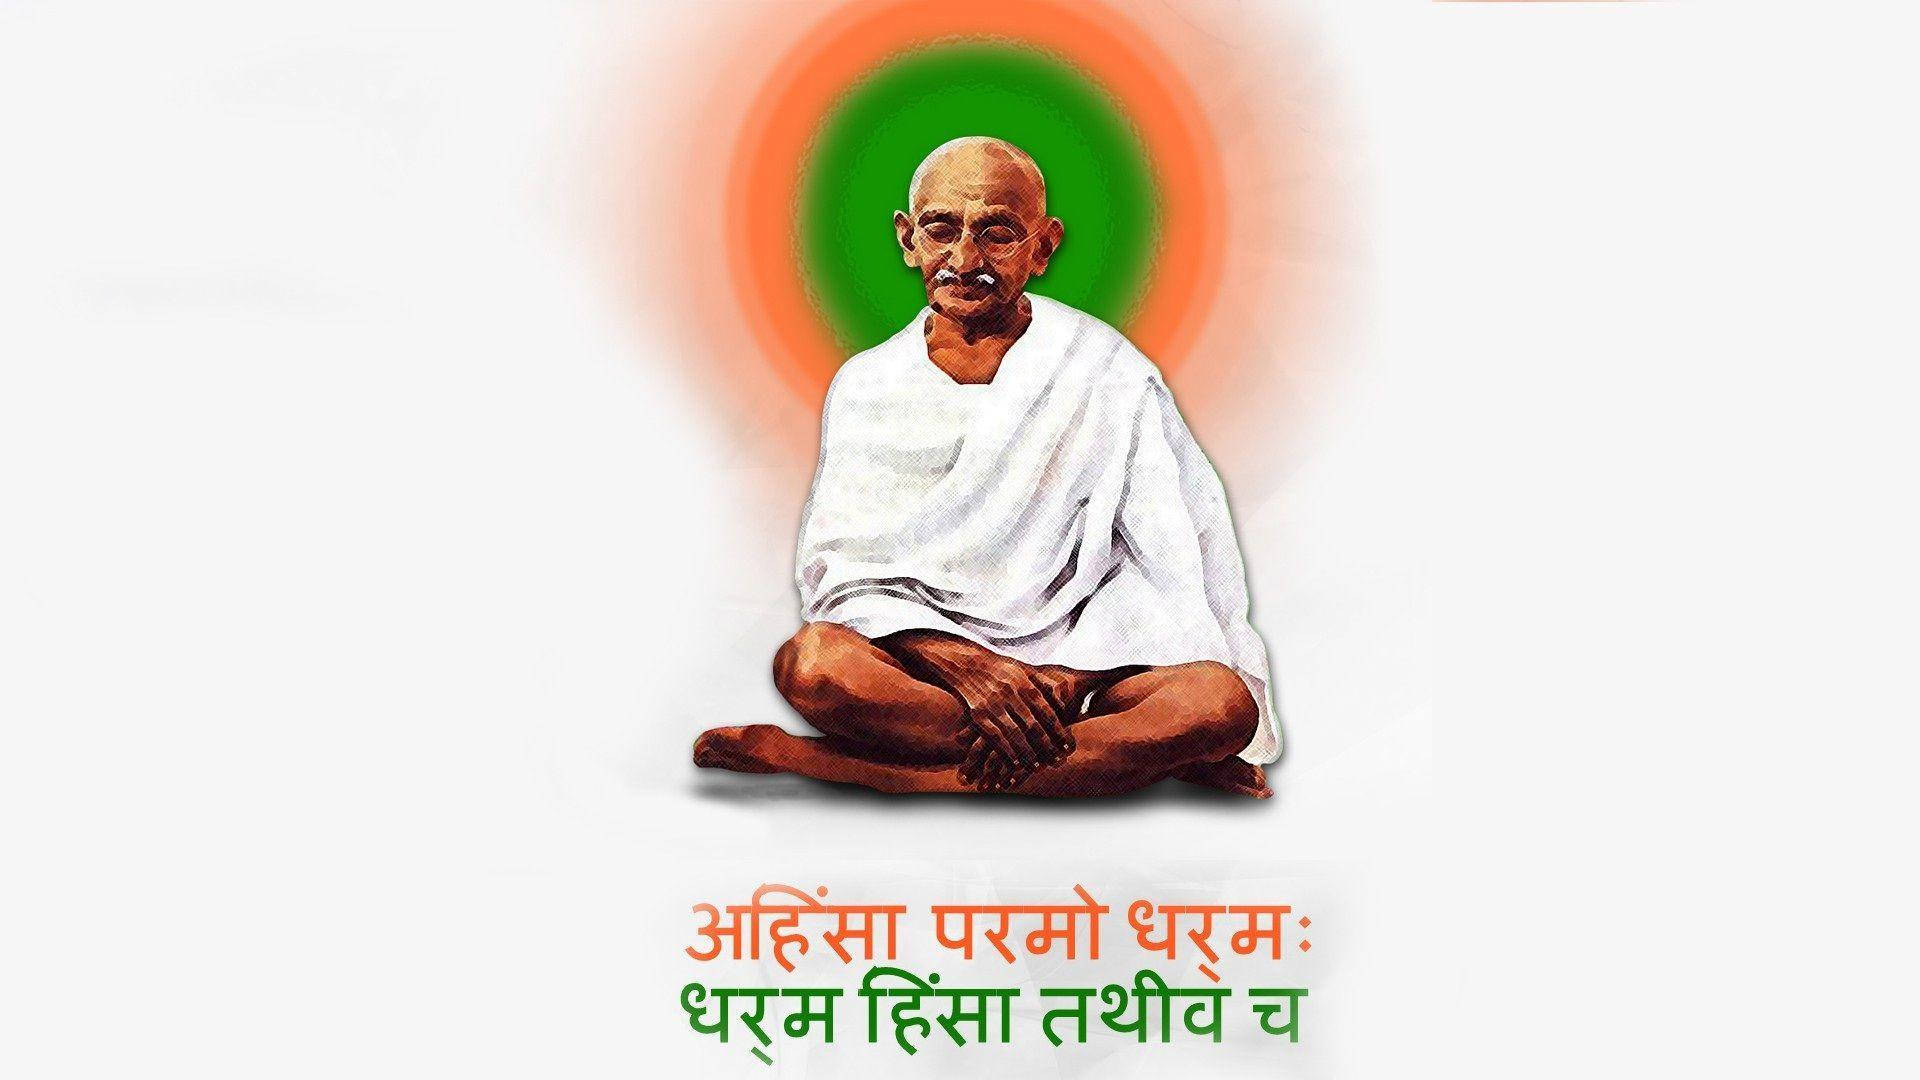 Mahatma Gandhi - The Peaceful Revolutionary